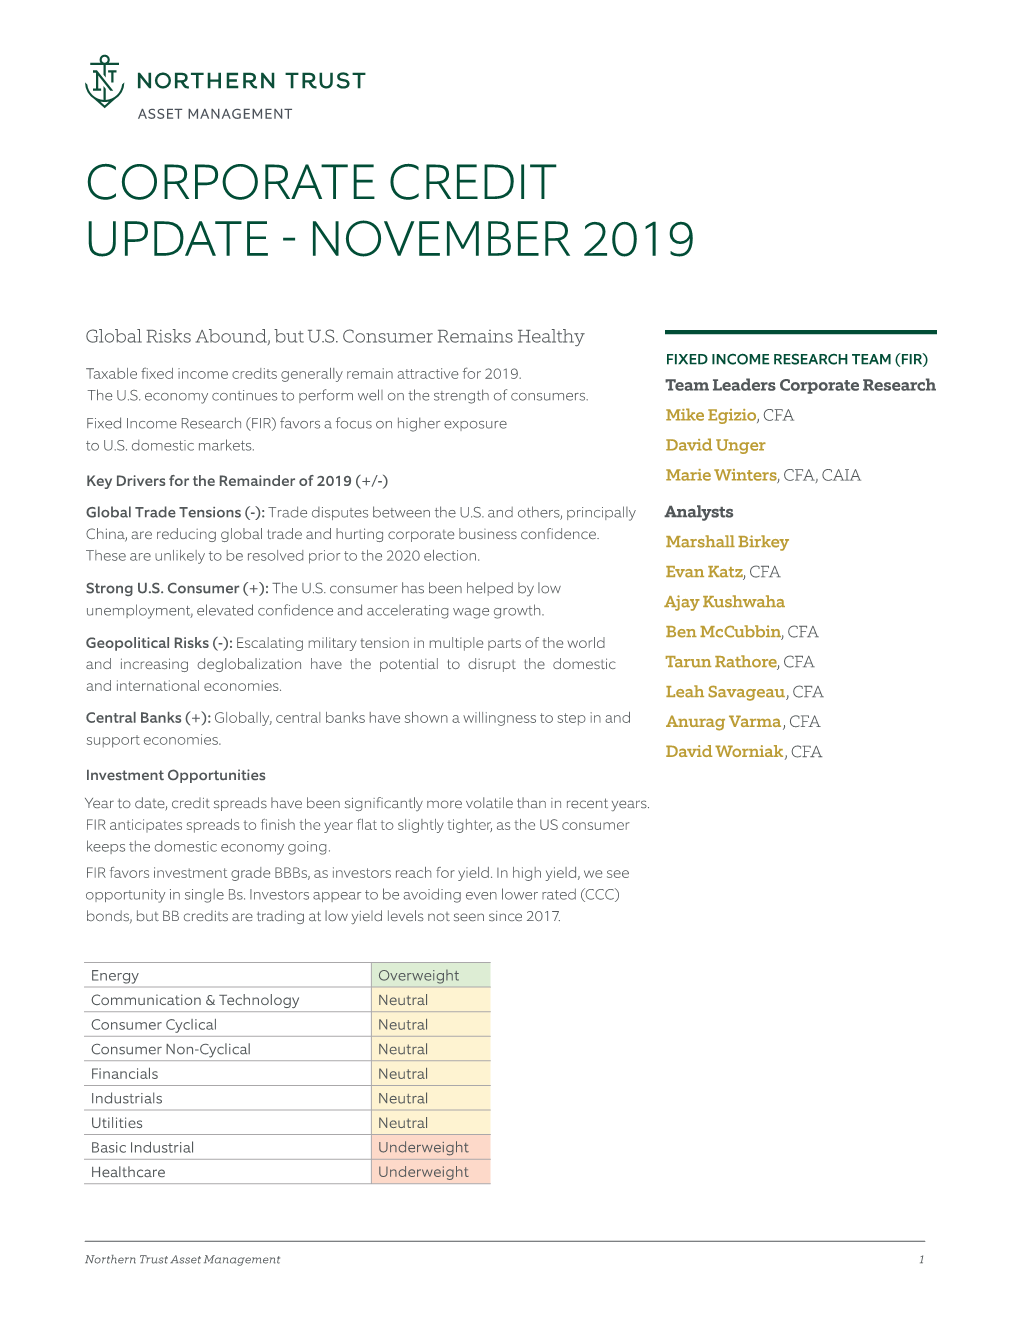 Corporate Credit Update November 2019